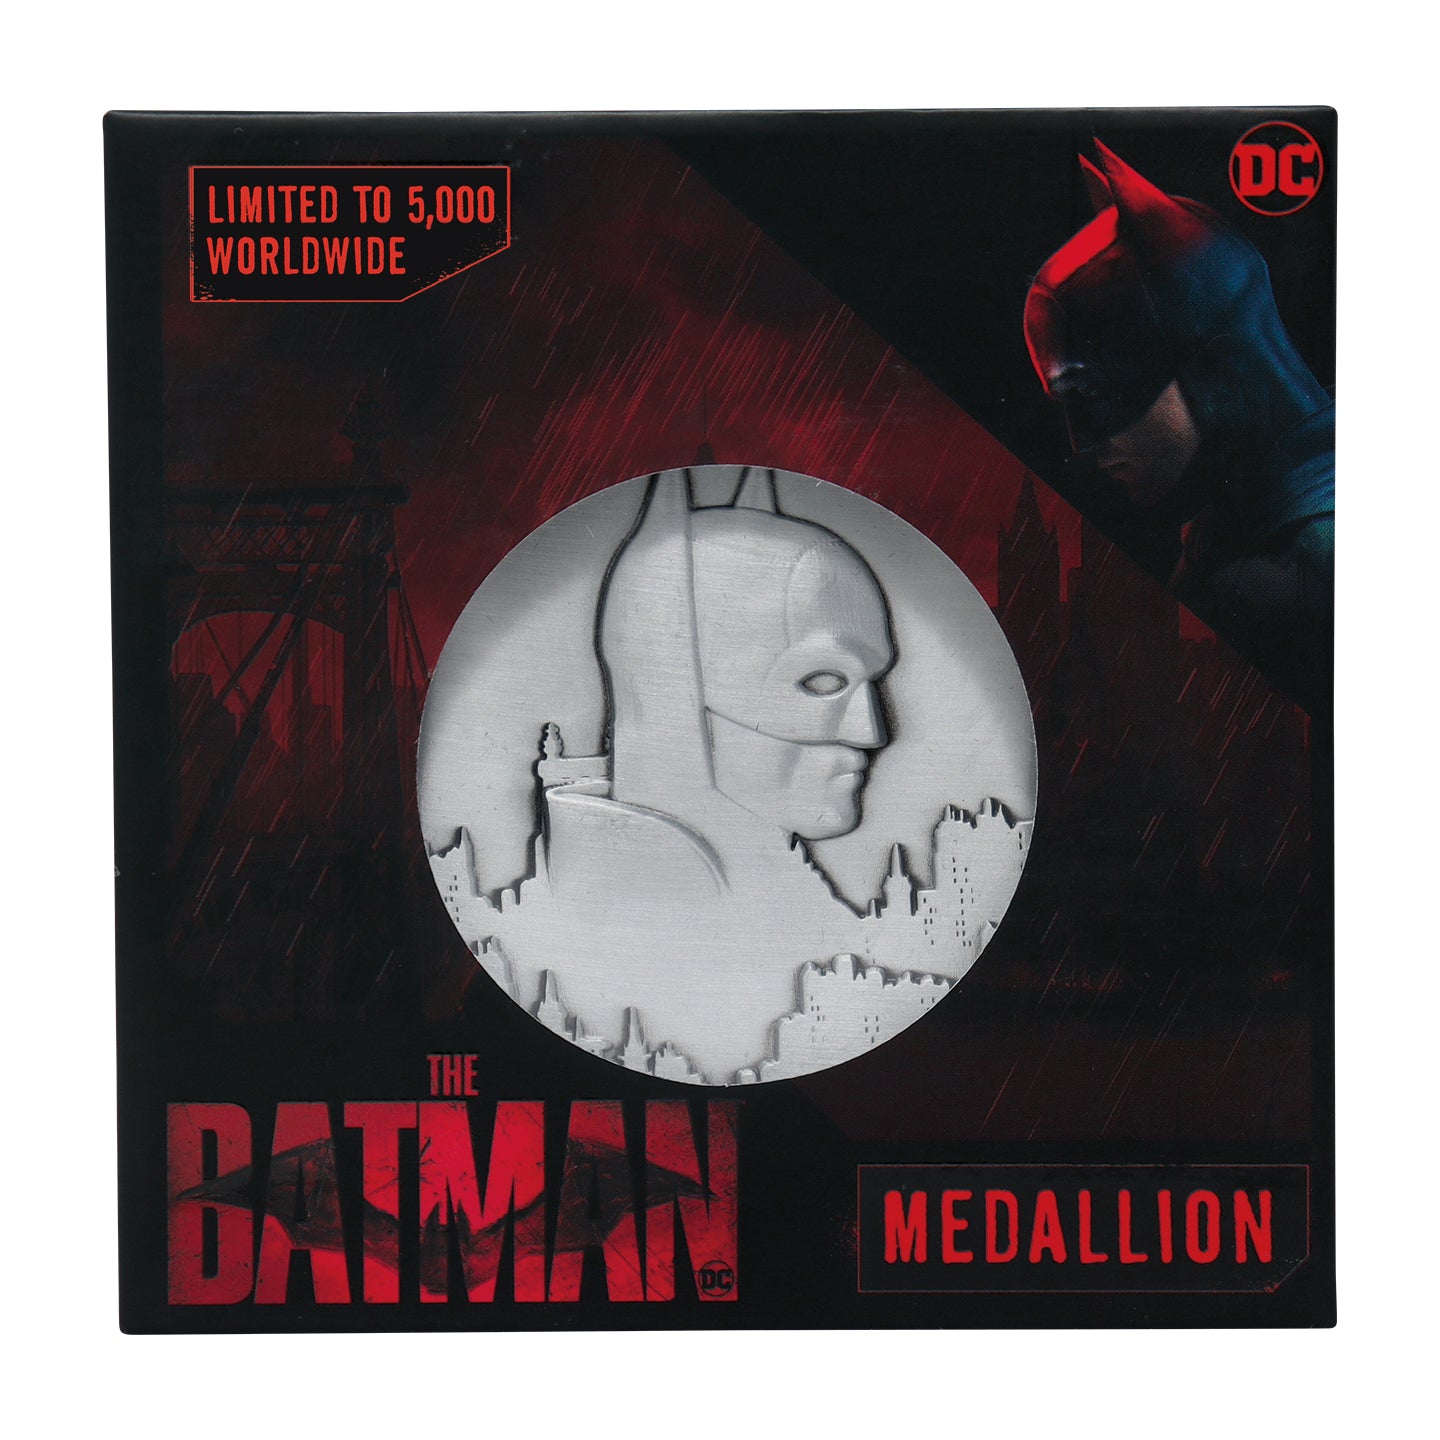 DC The Batman Limited Edition Medallion